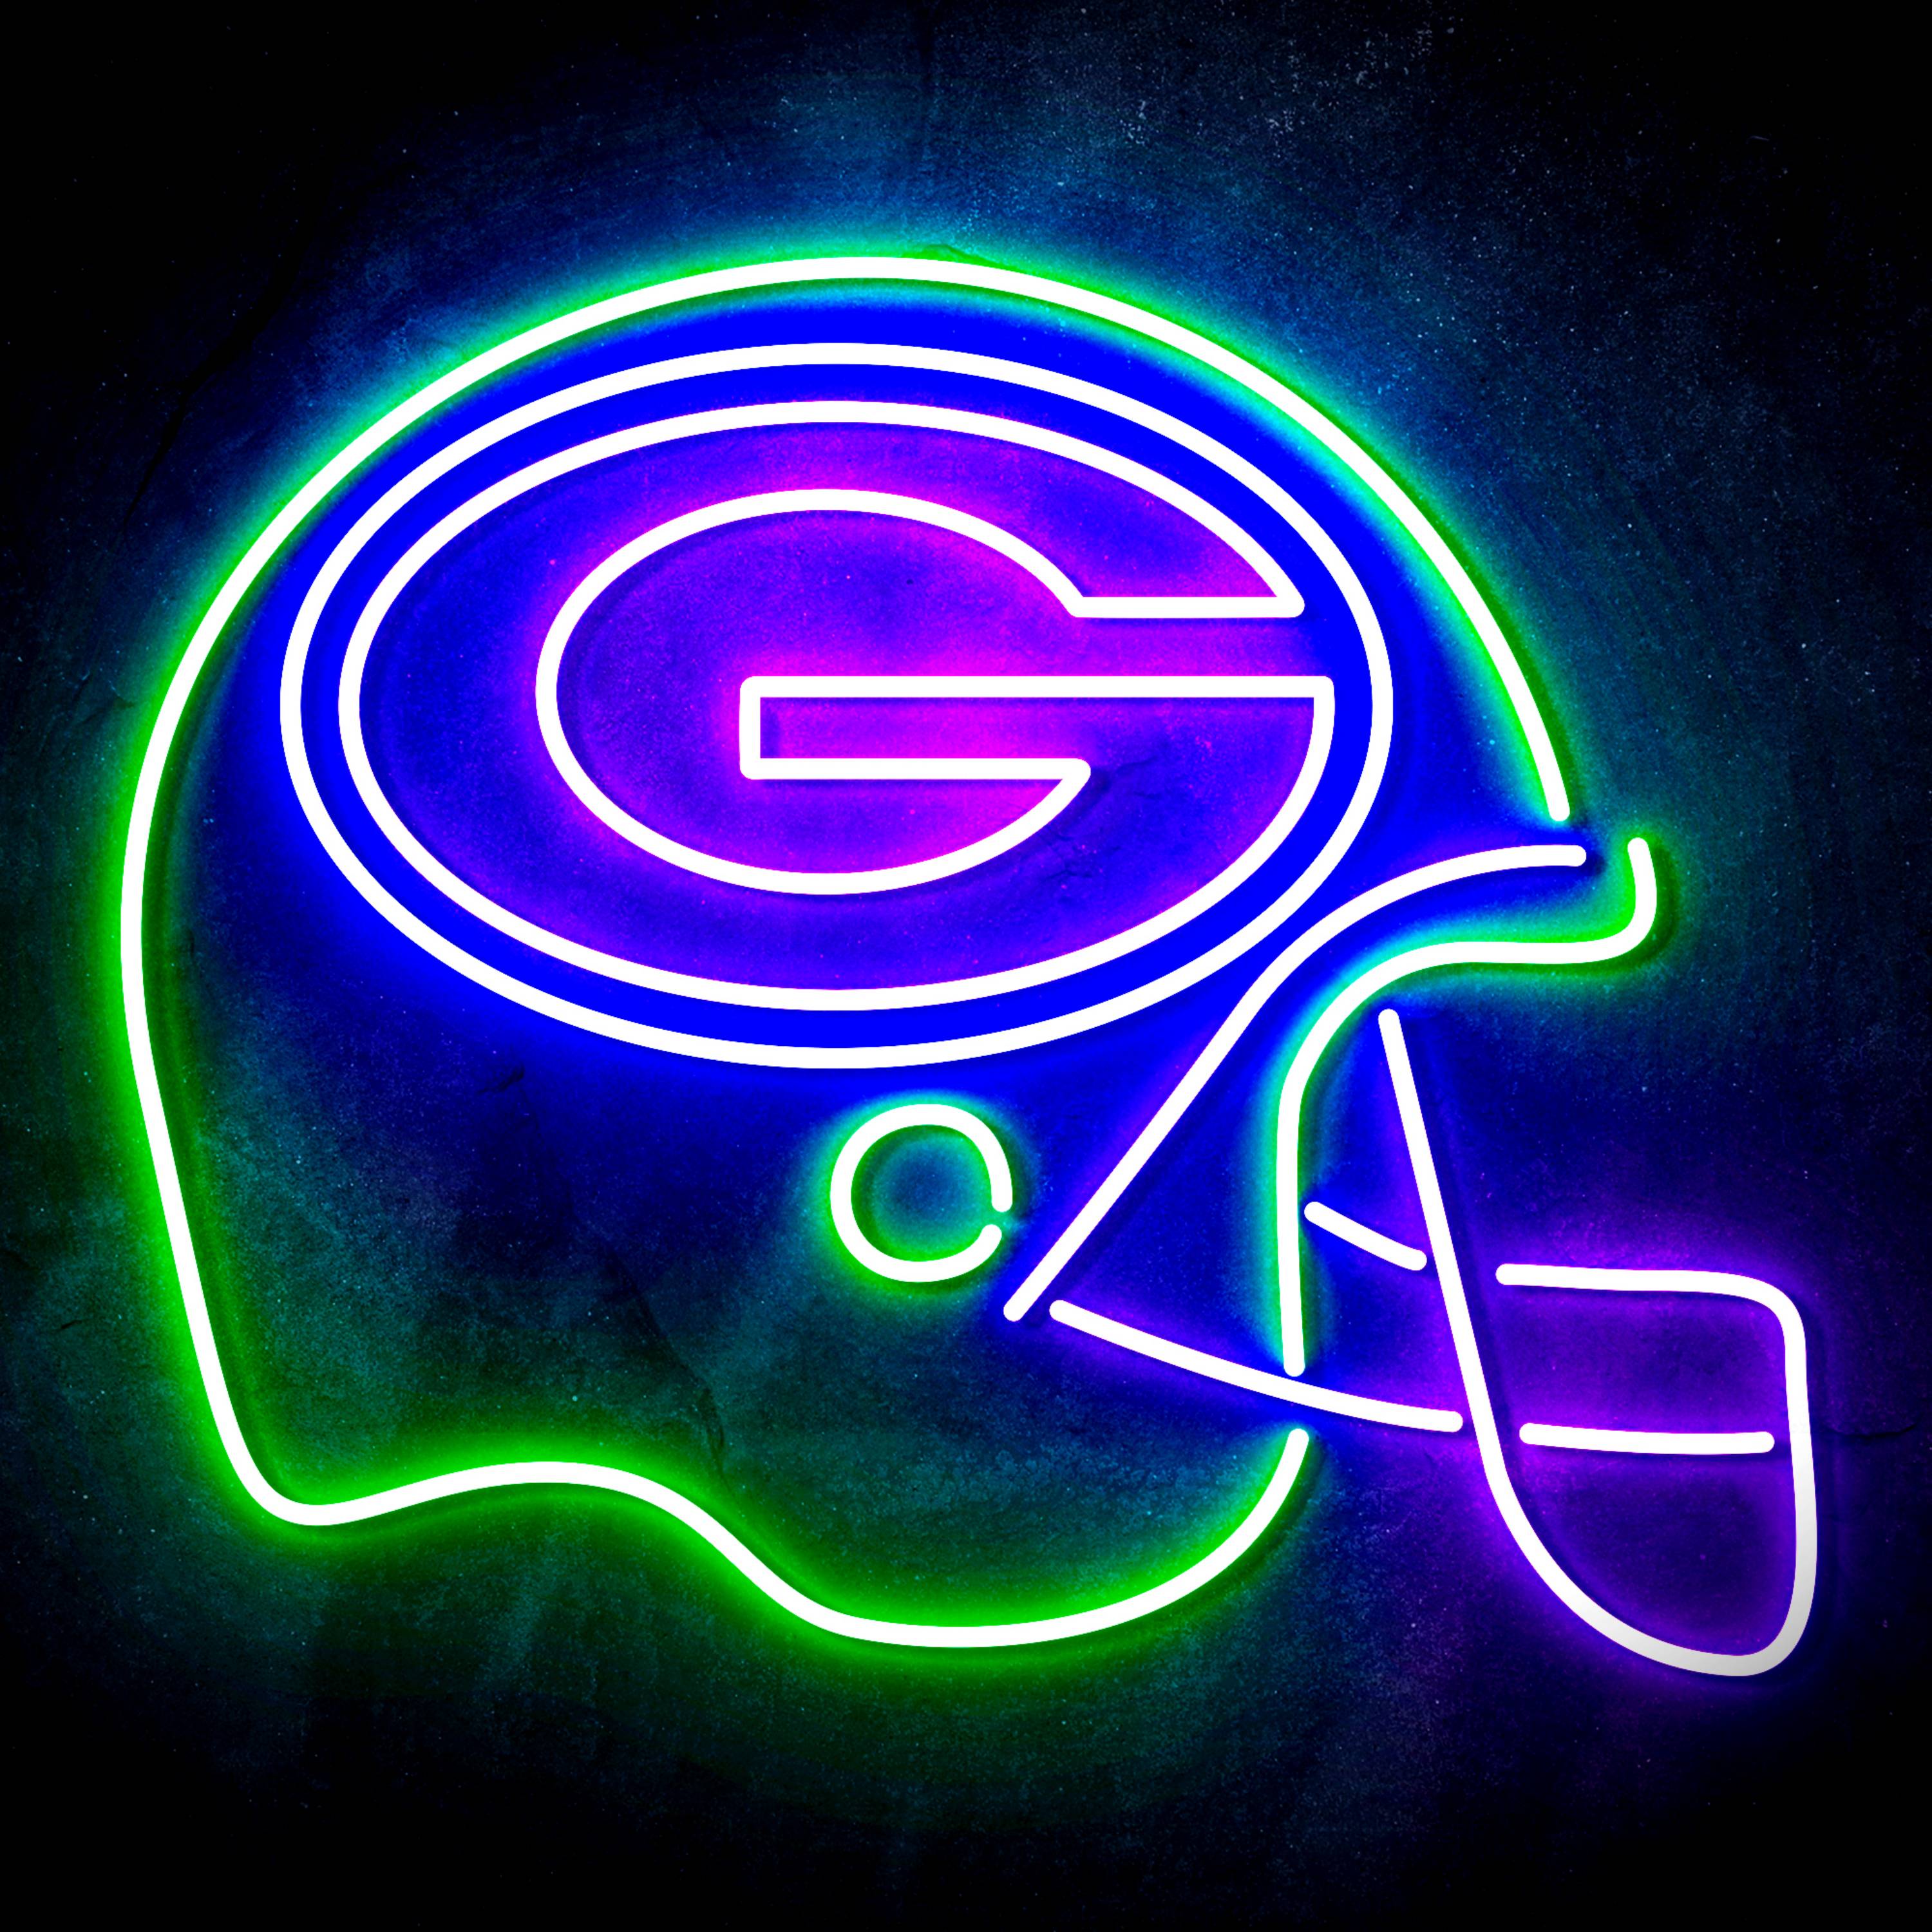 NFL Helmet Green Bay Packers LED Neon Sign